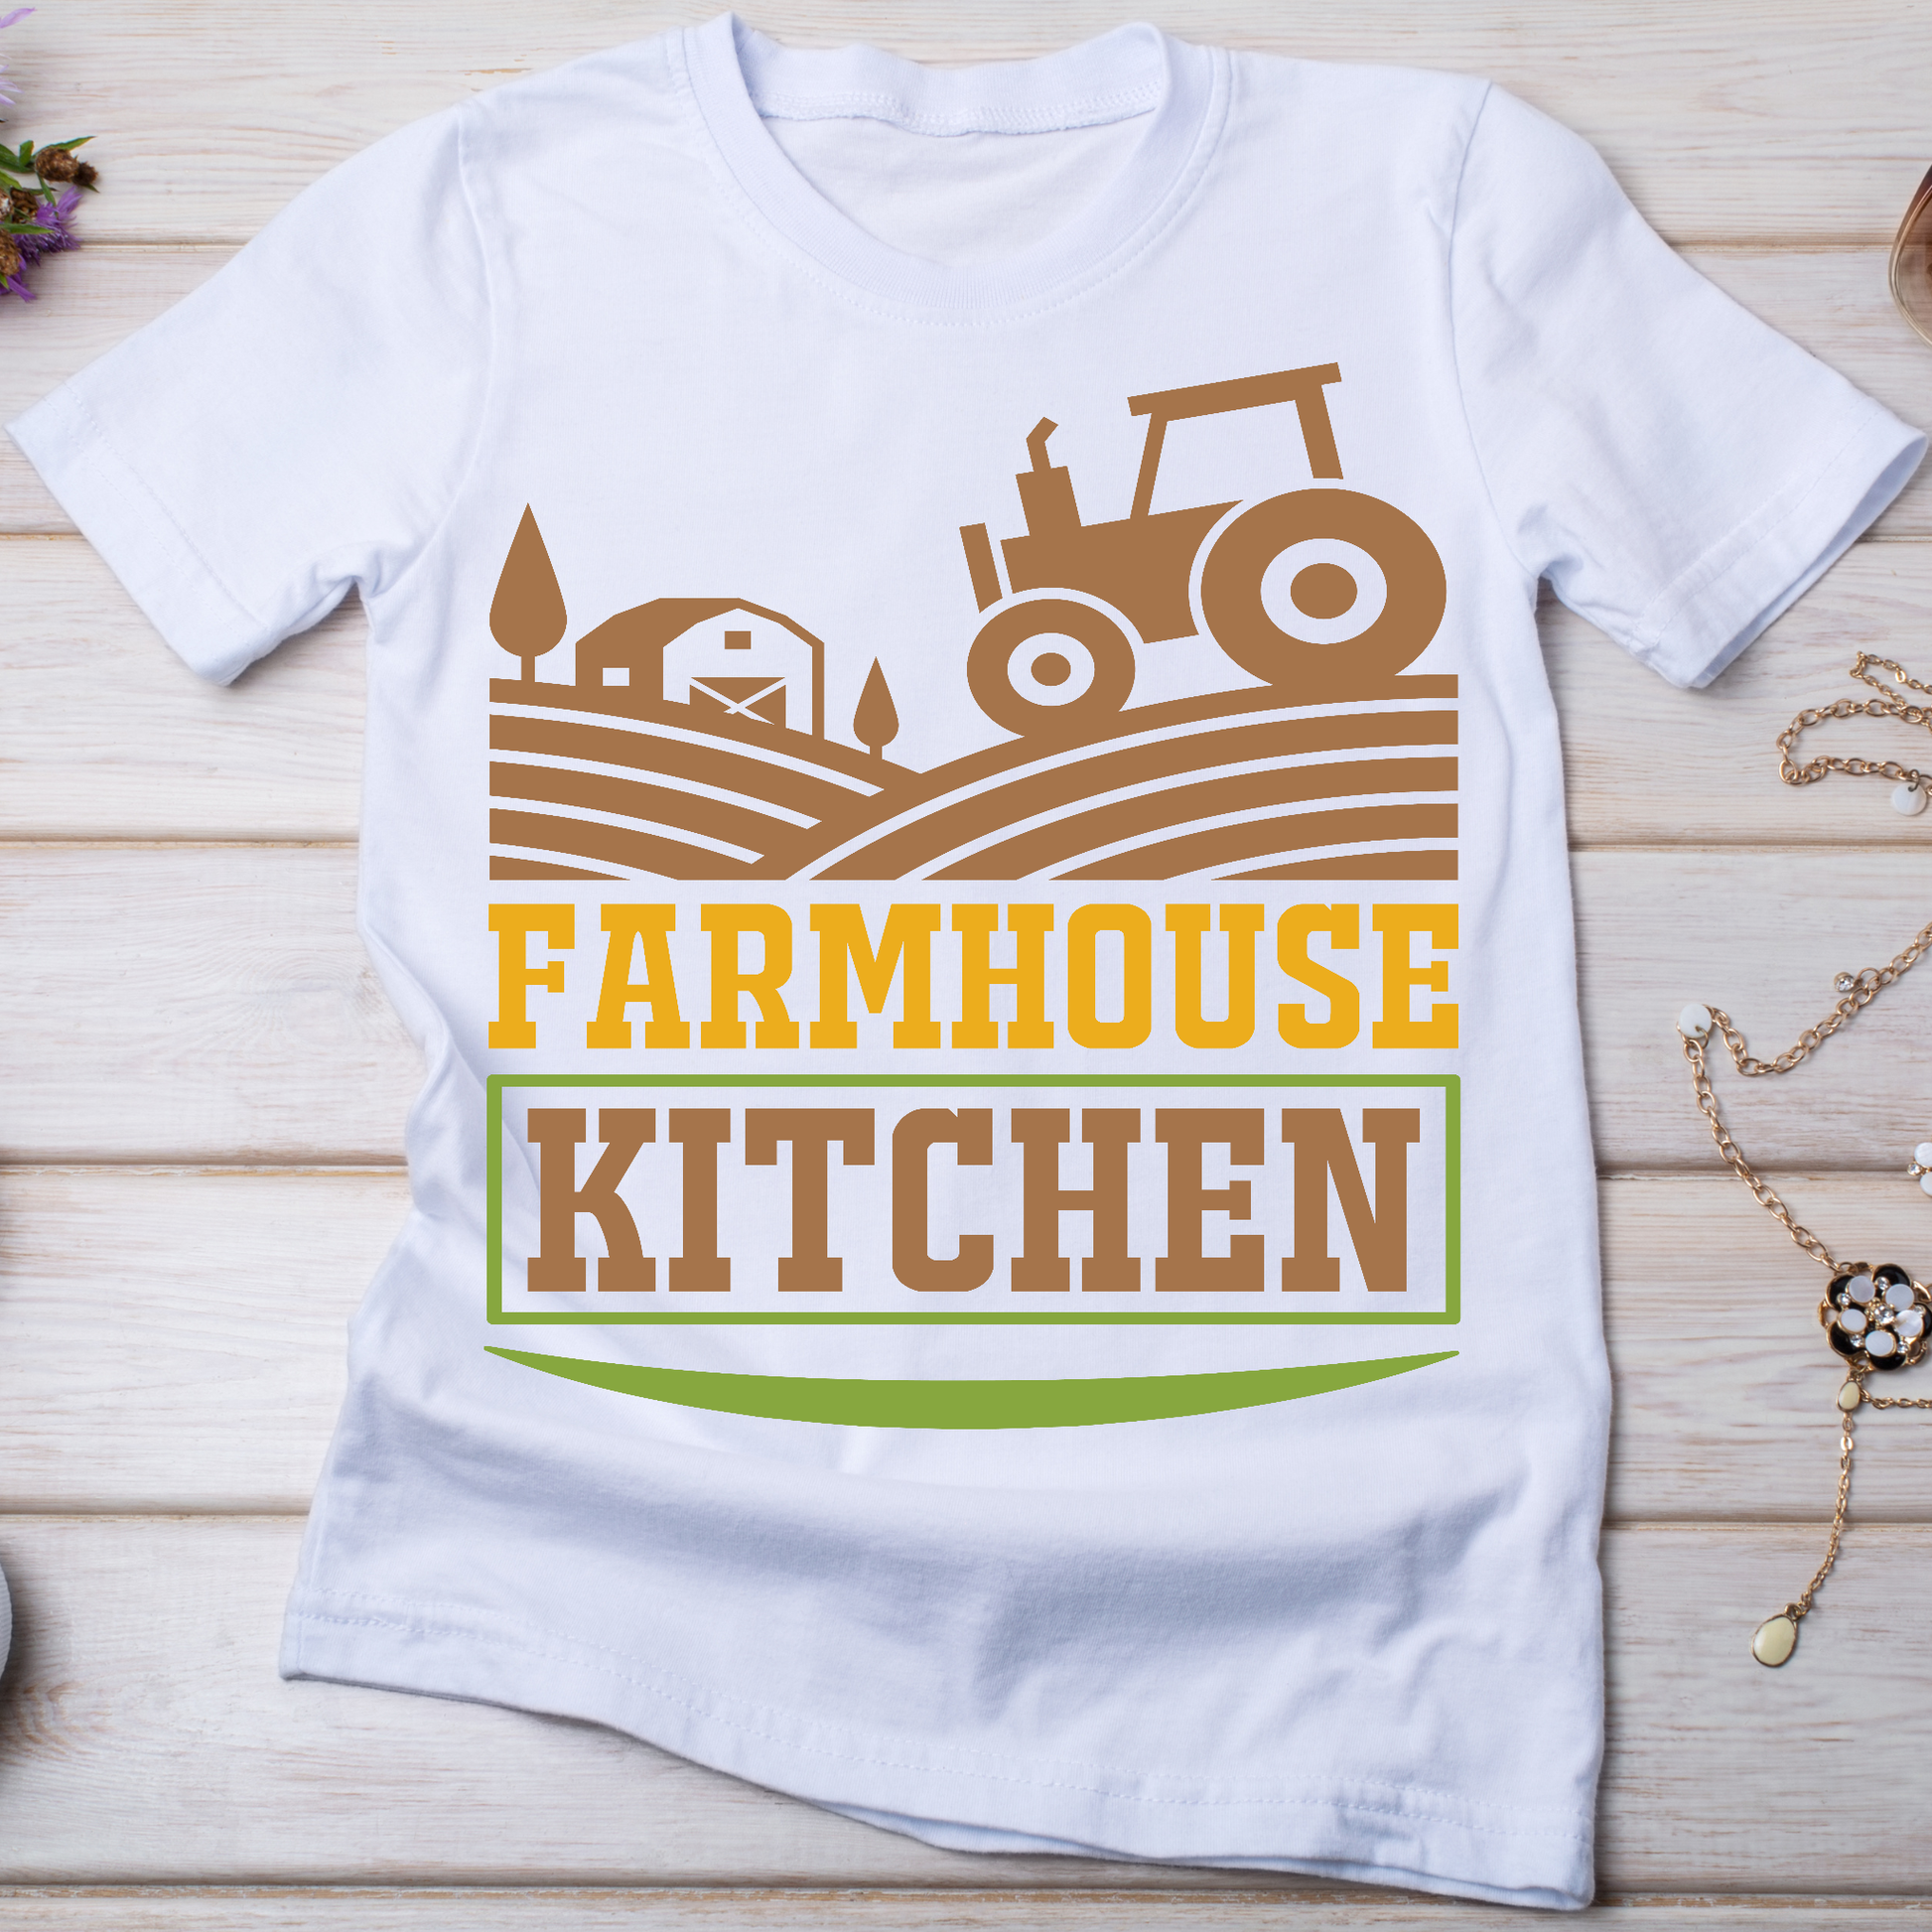 Farmhouse kitchen Women's trendy farming t-shirt - Premium t-shirt from Lees Krazy Teez - Just $21.95! Shop now at Lees Krazy Teez